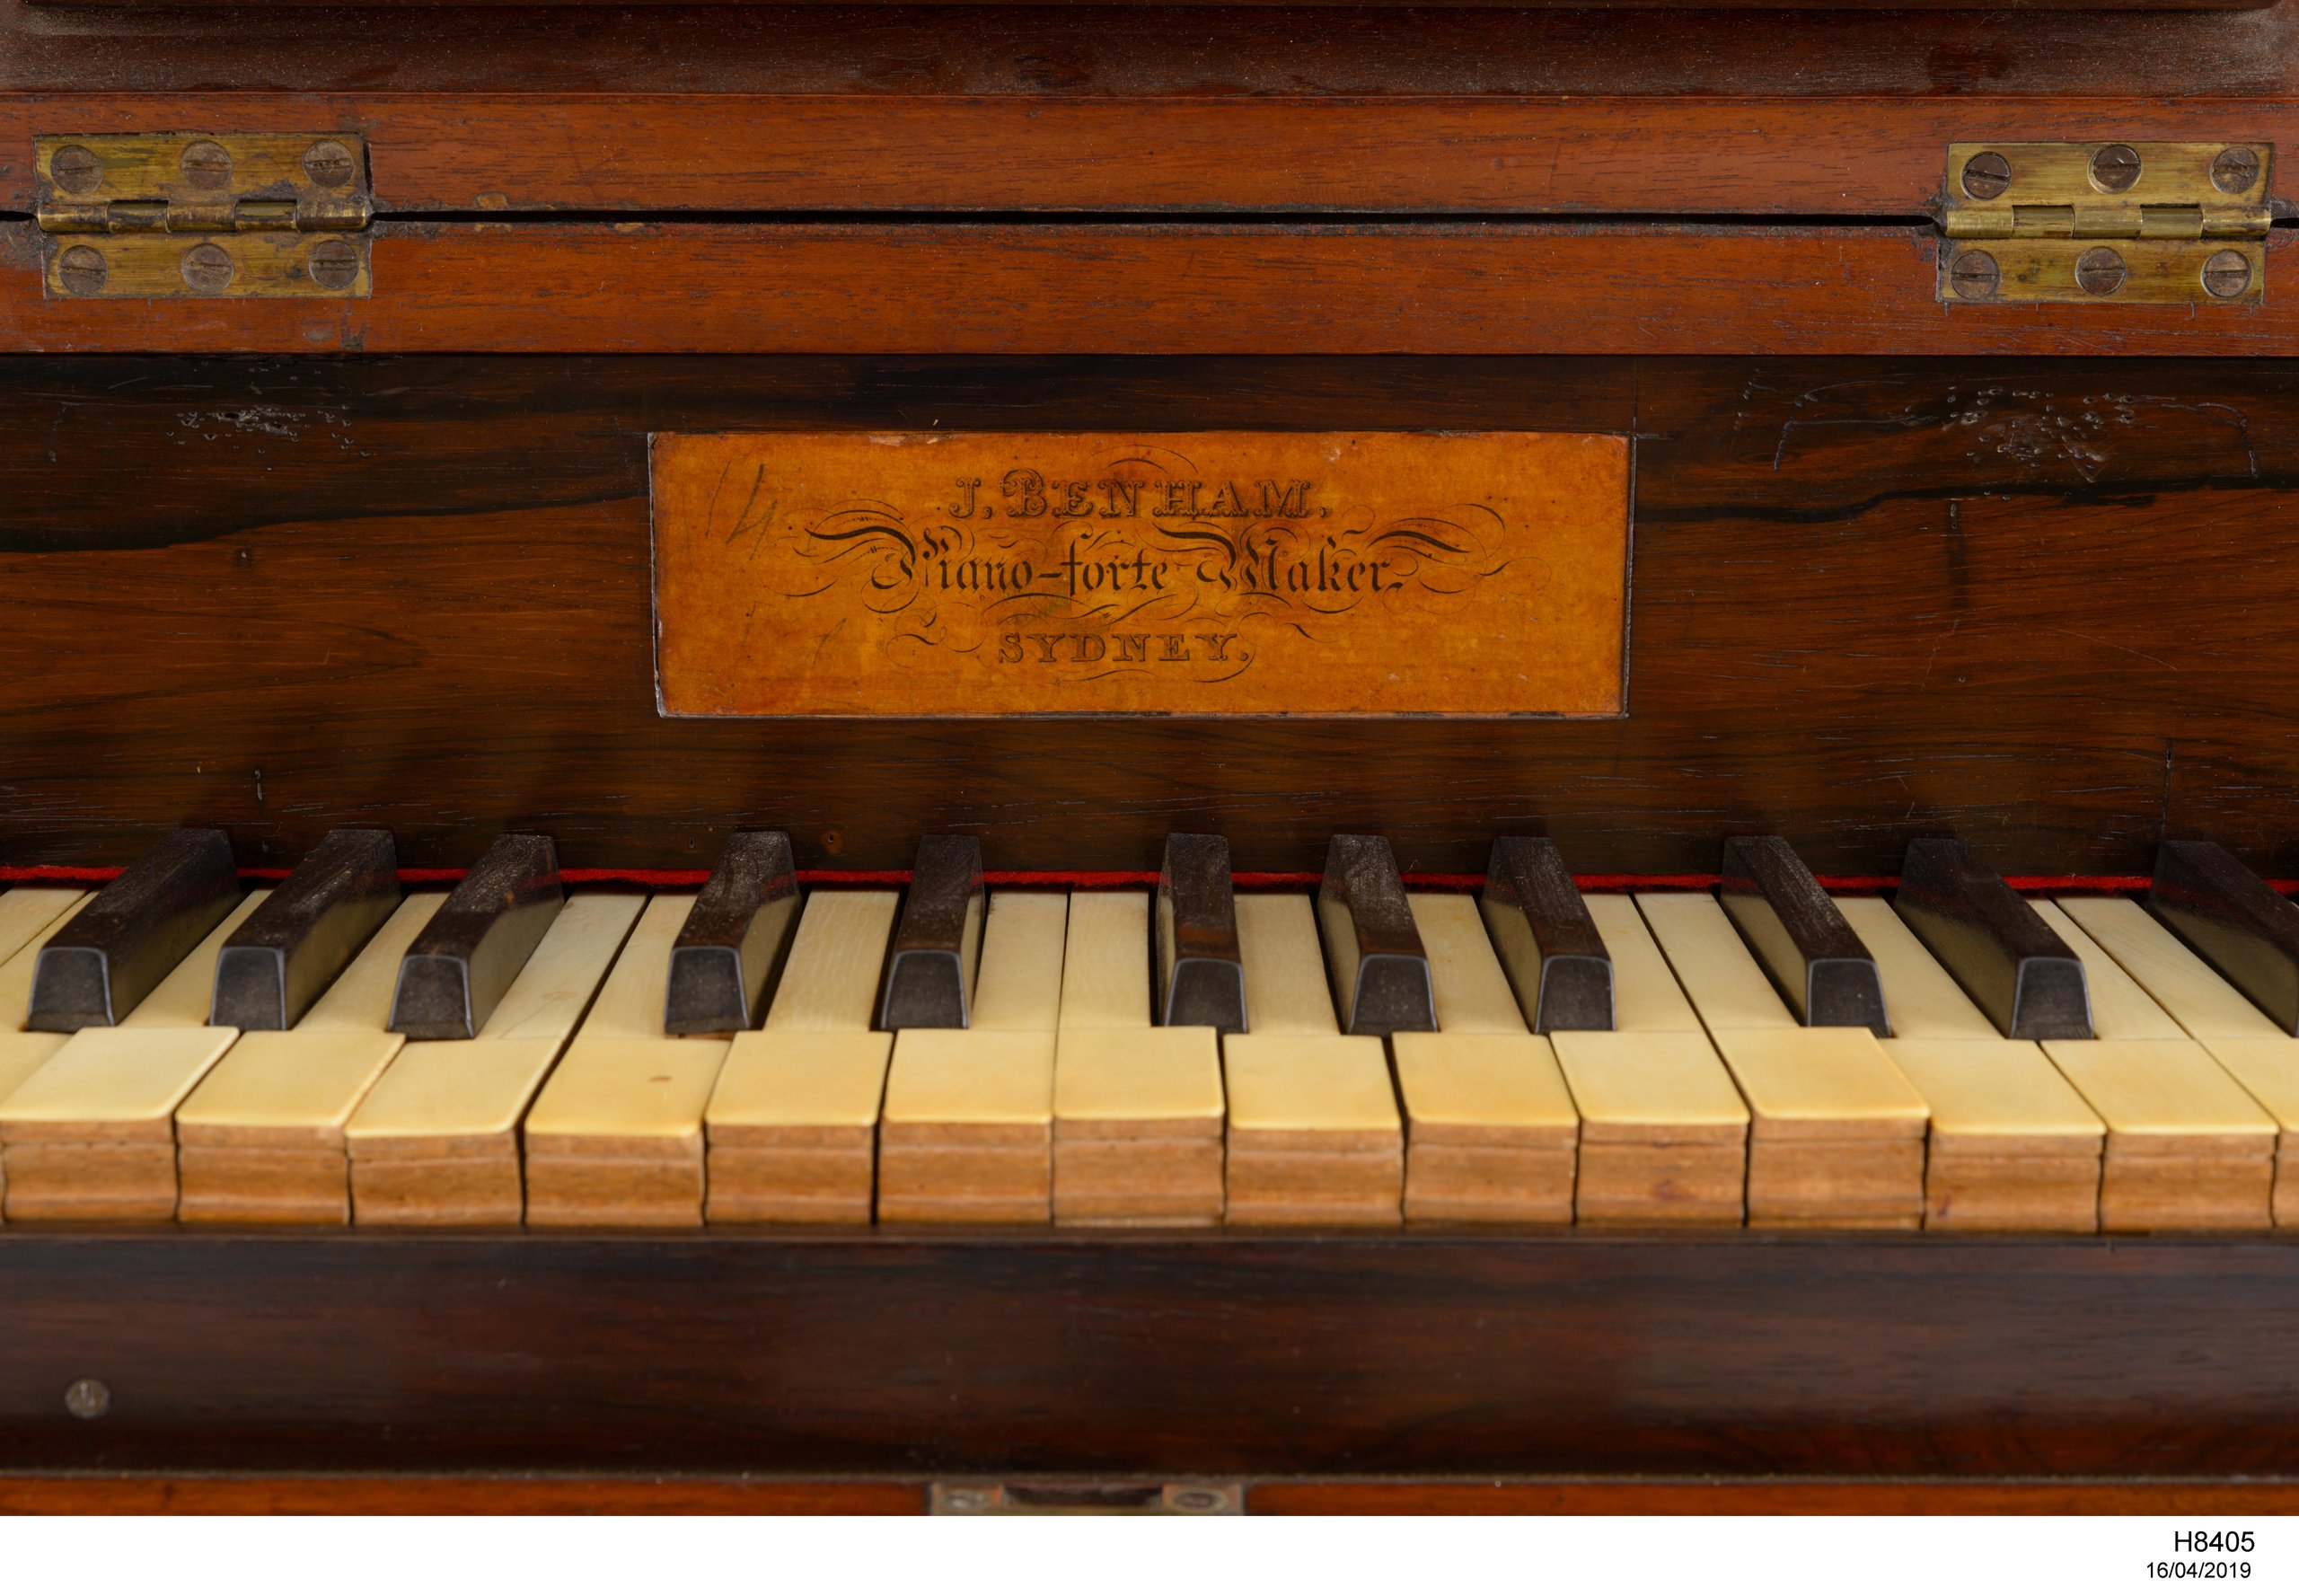 Upright pianoforte by John Benham